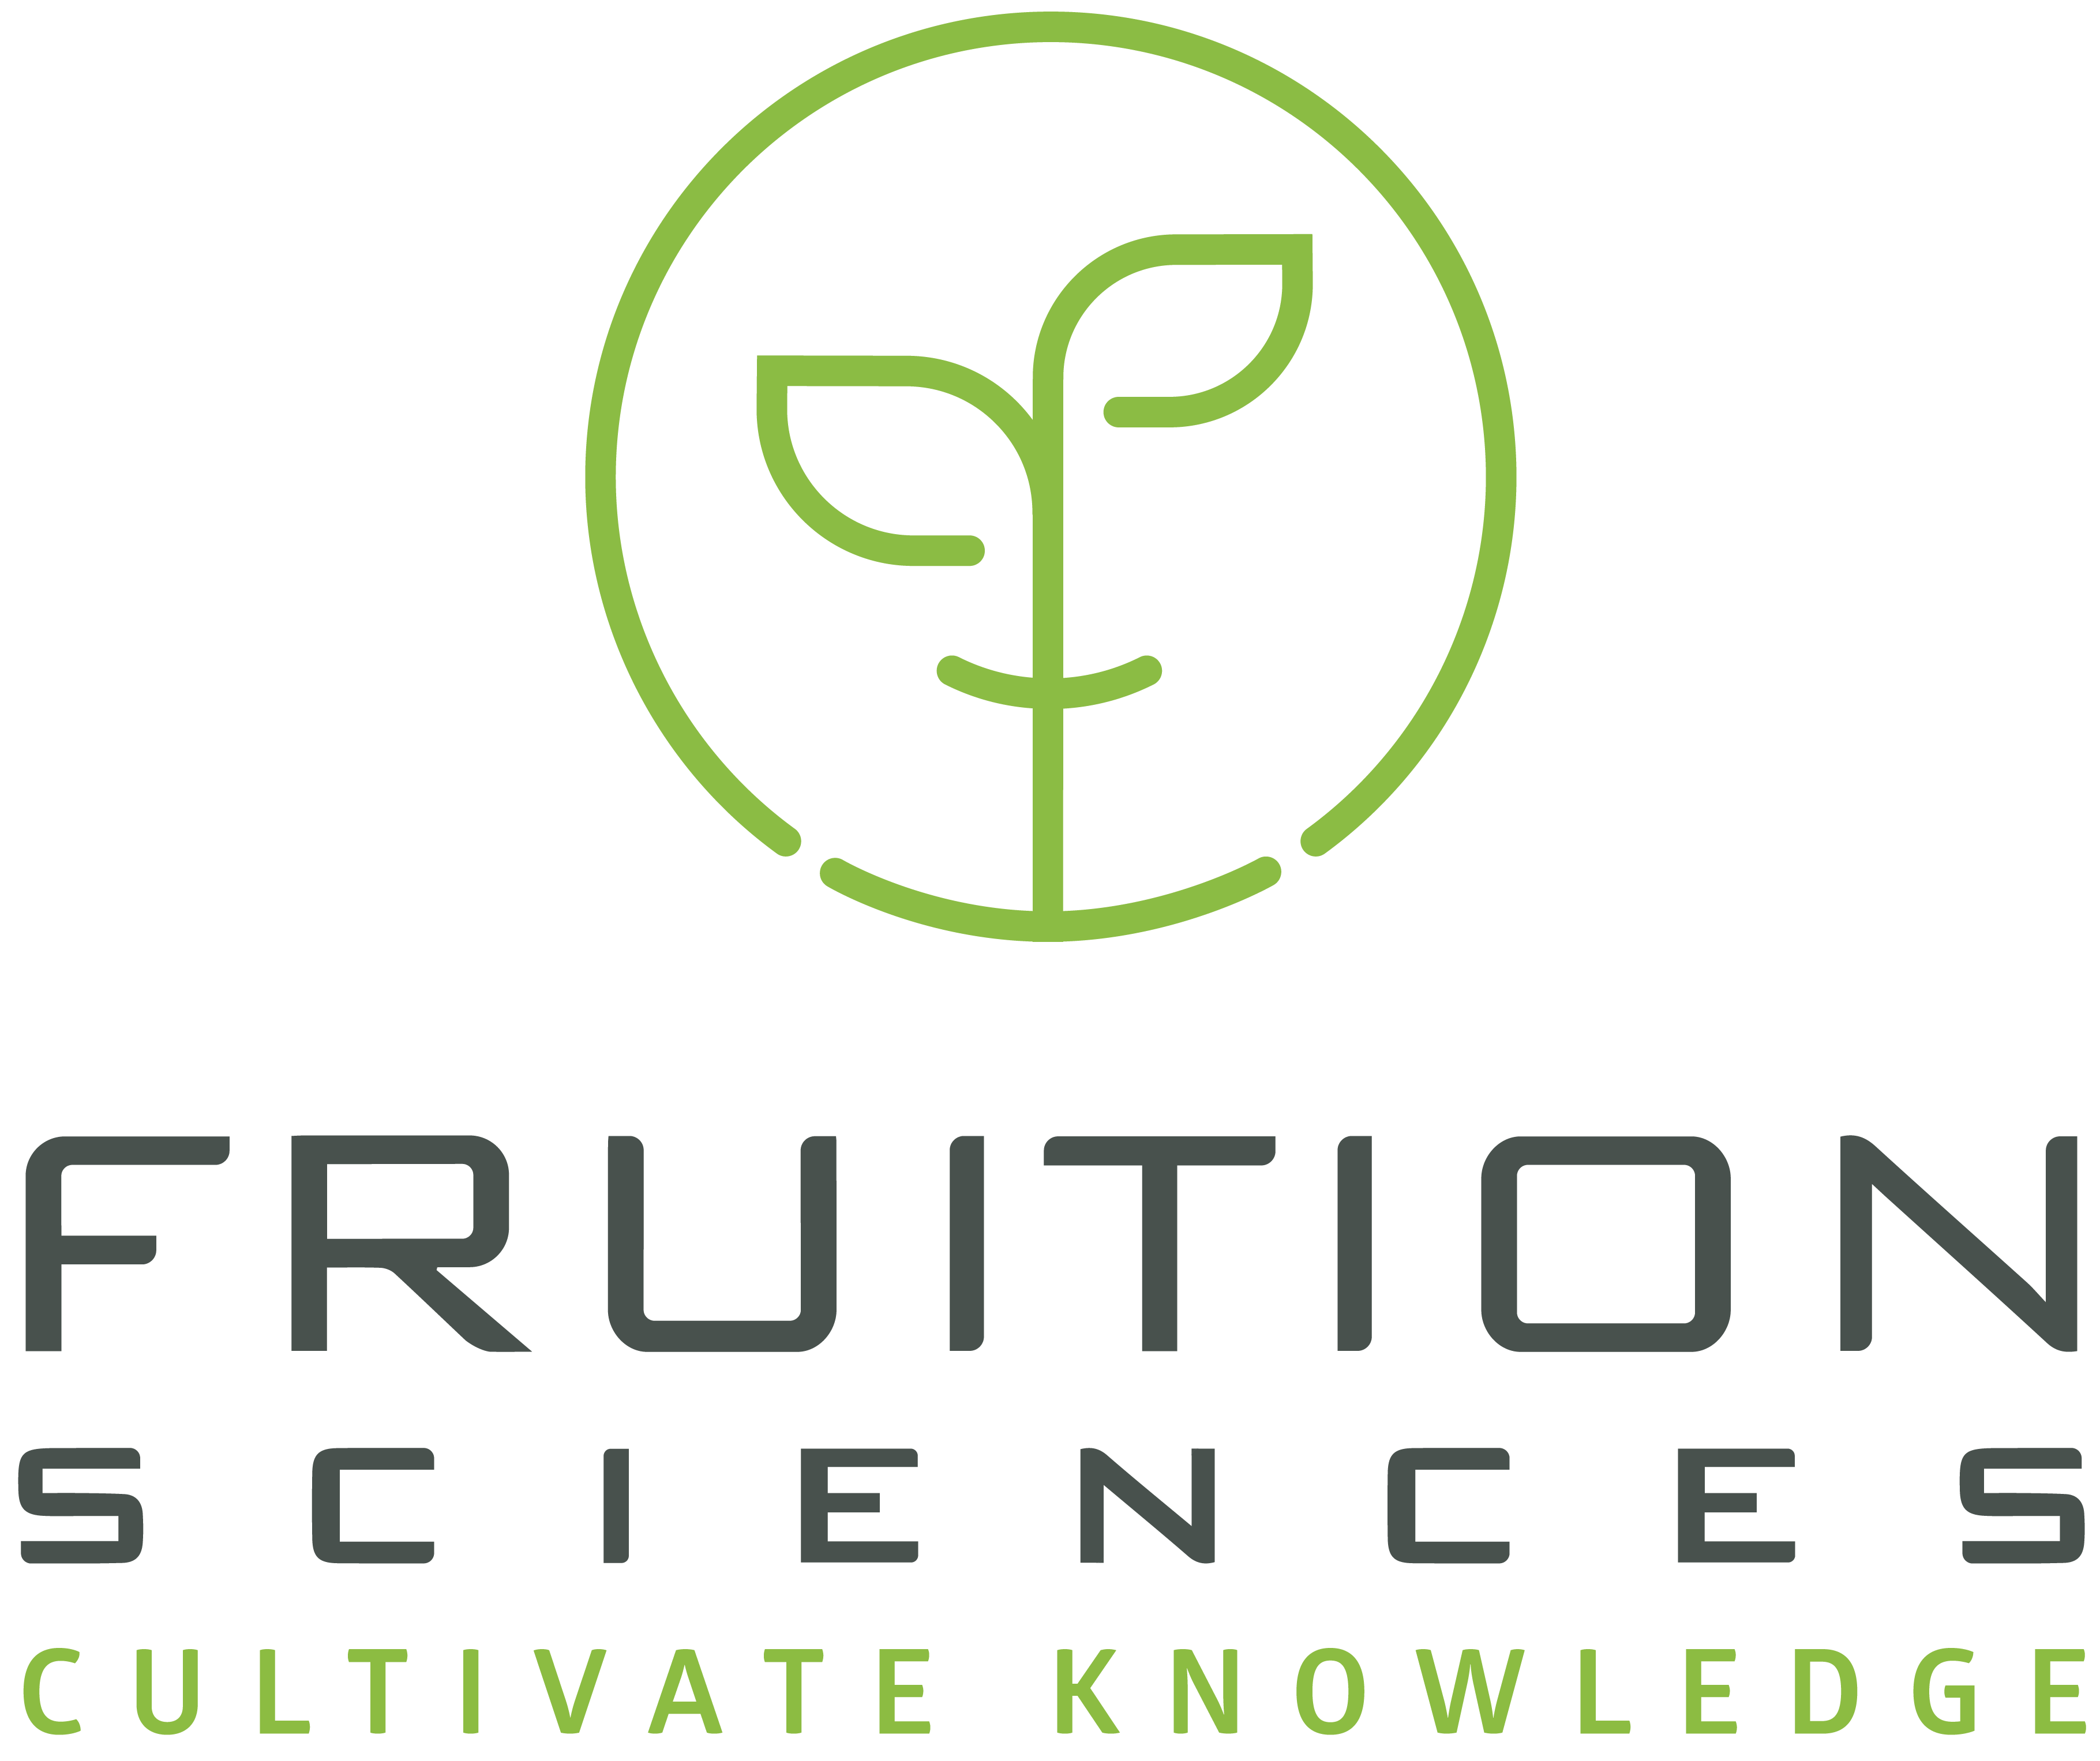 Fruition Sciences